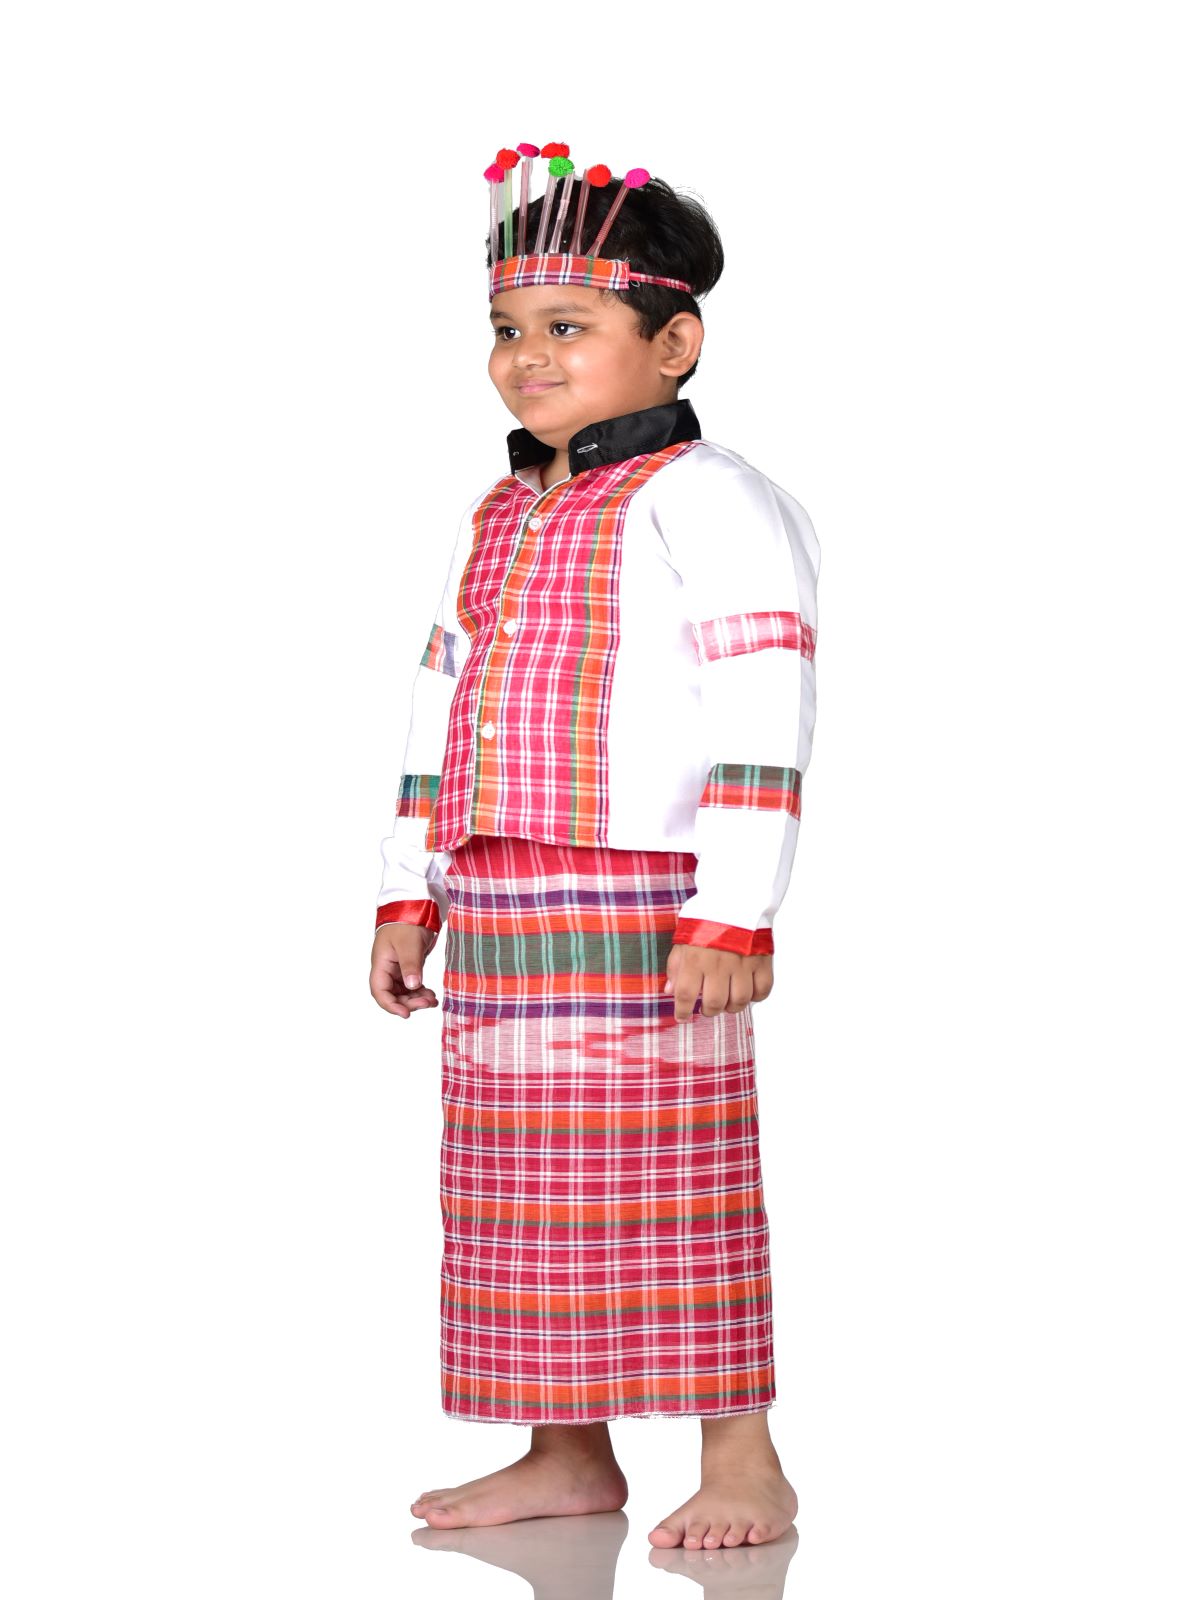 Traditional dresses of Assam